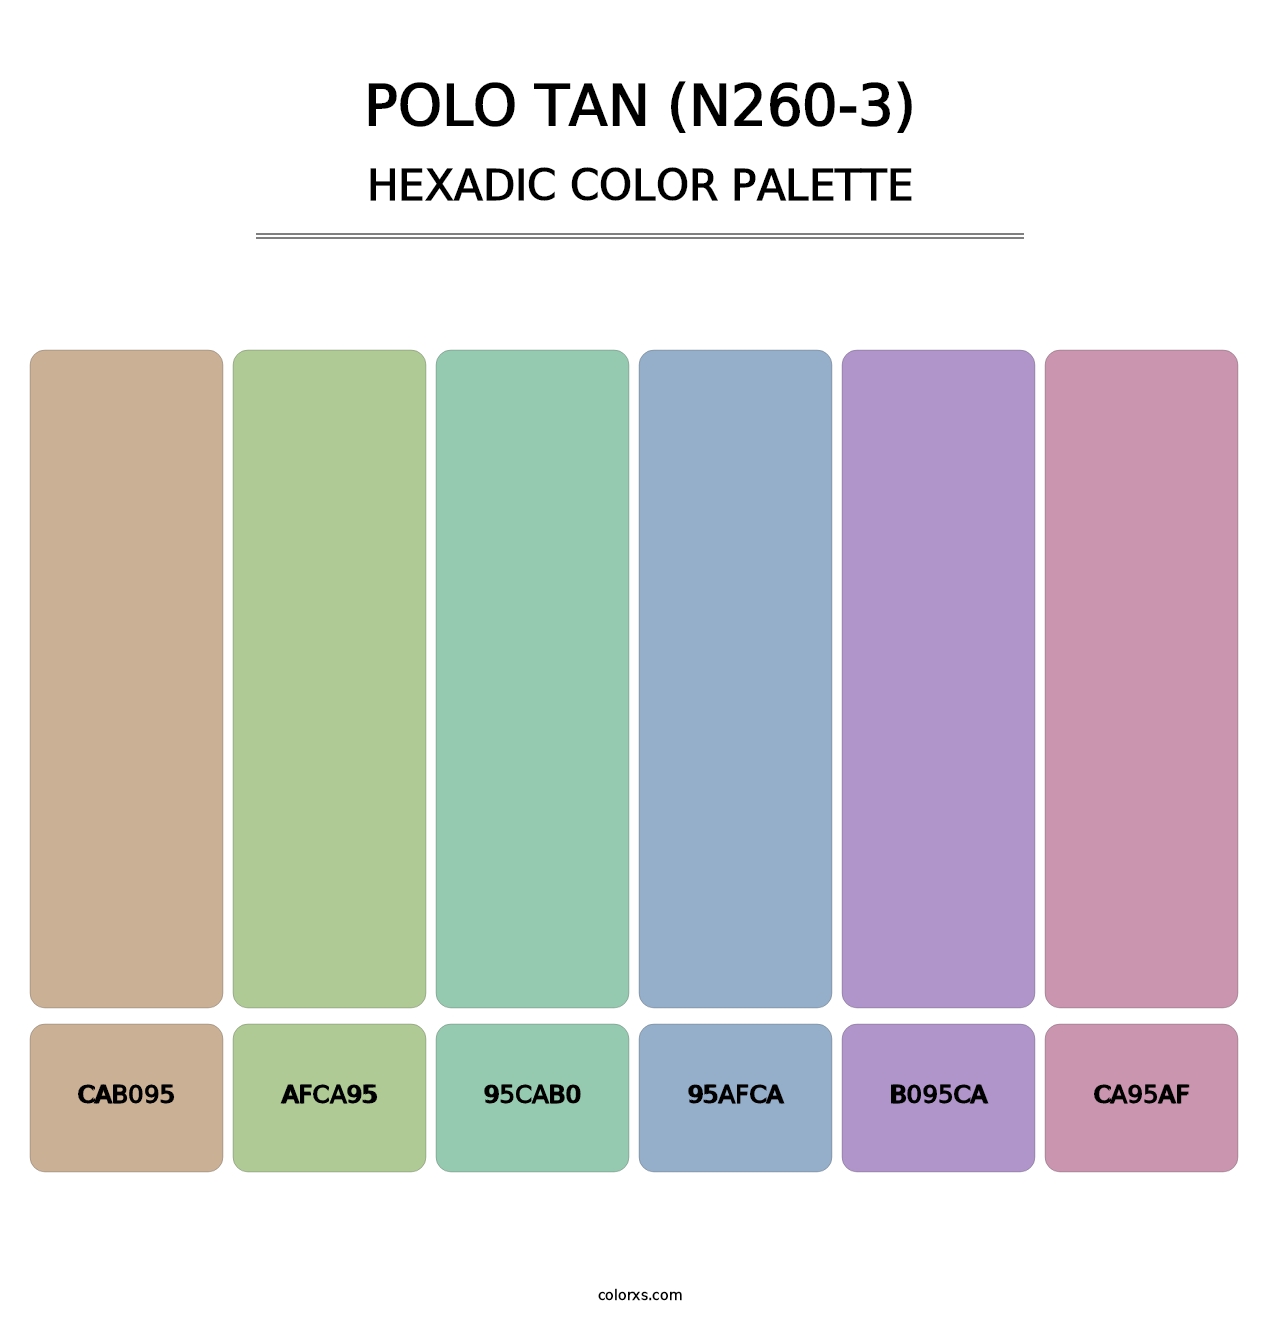 Polo Tan (N260-3) - Hexadic Color Palette